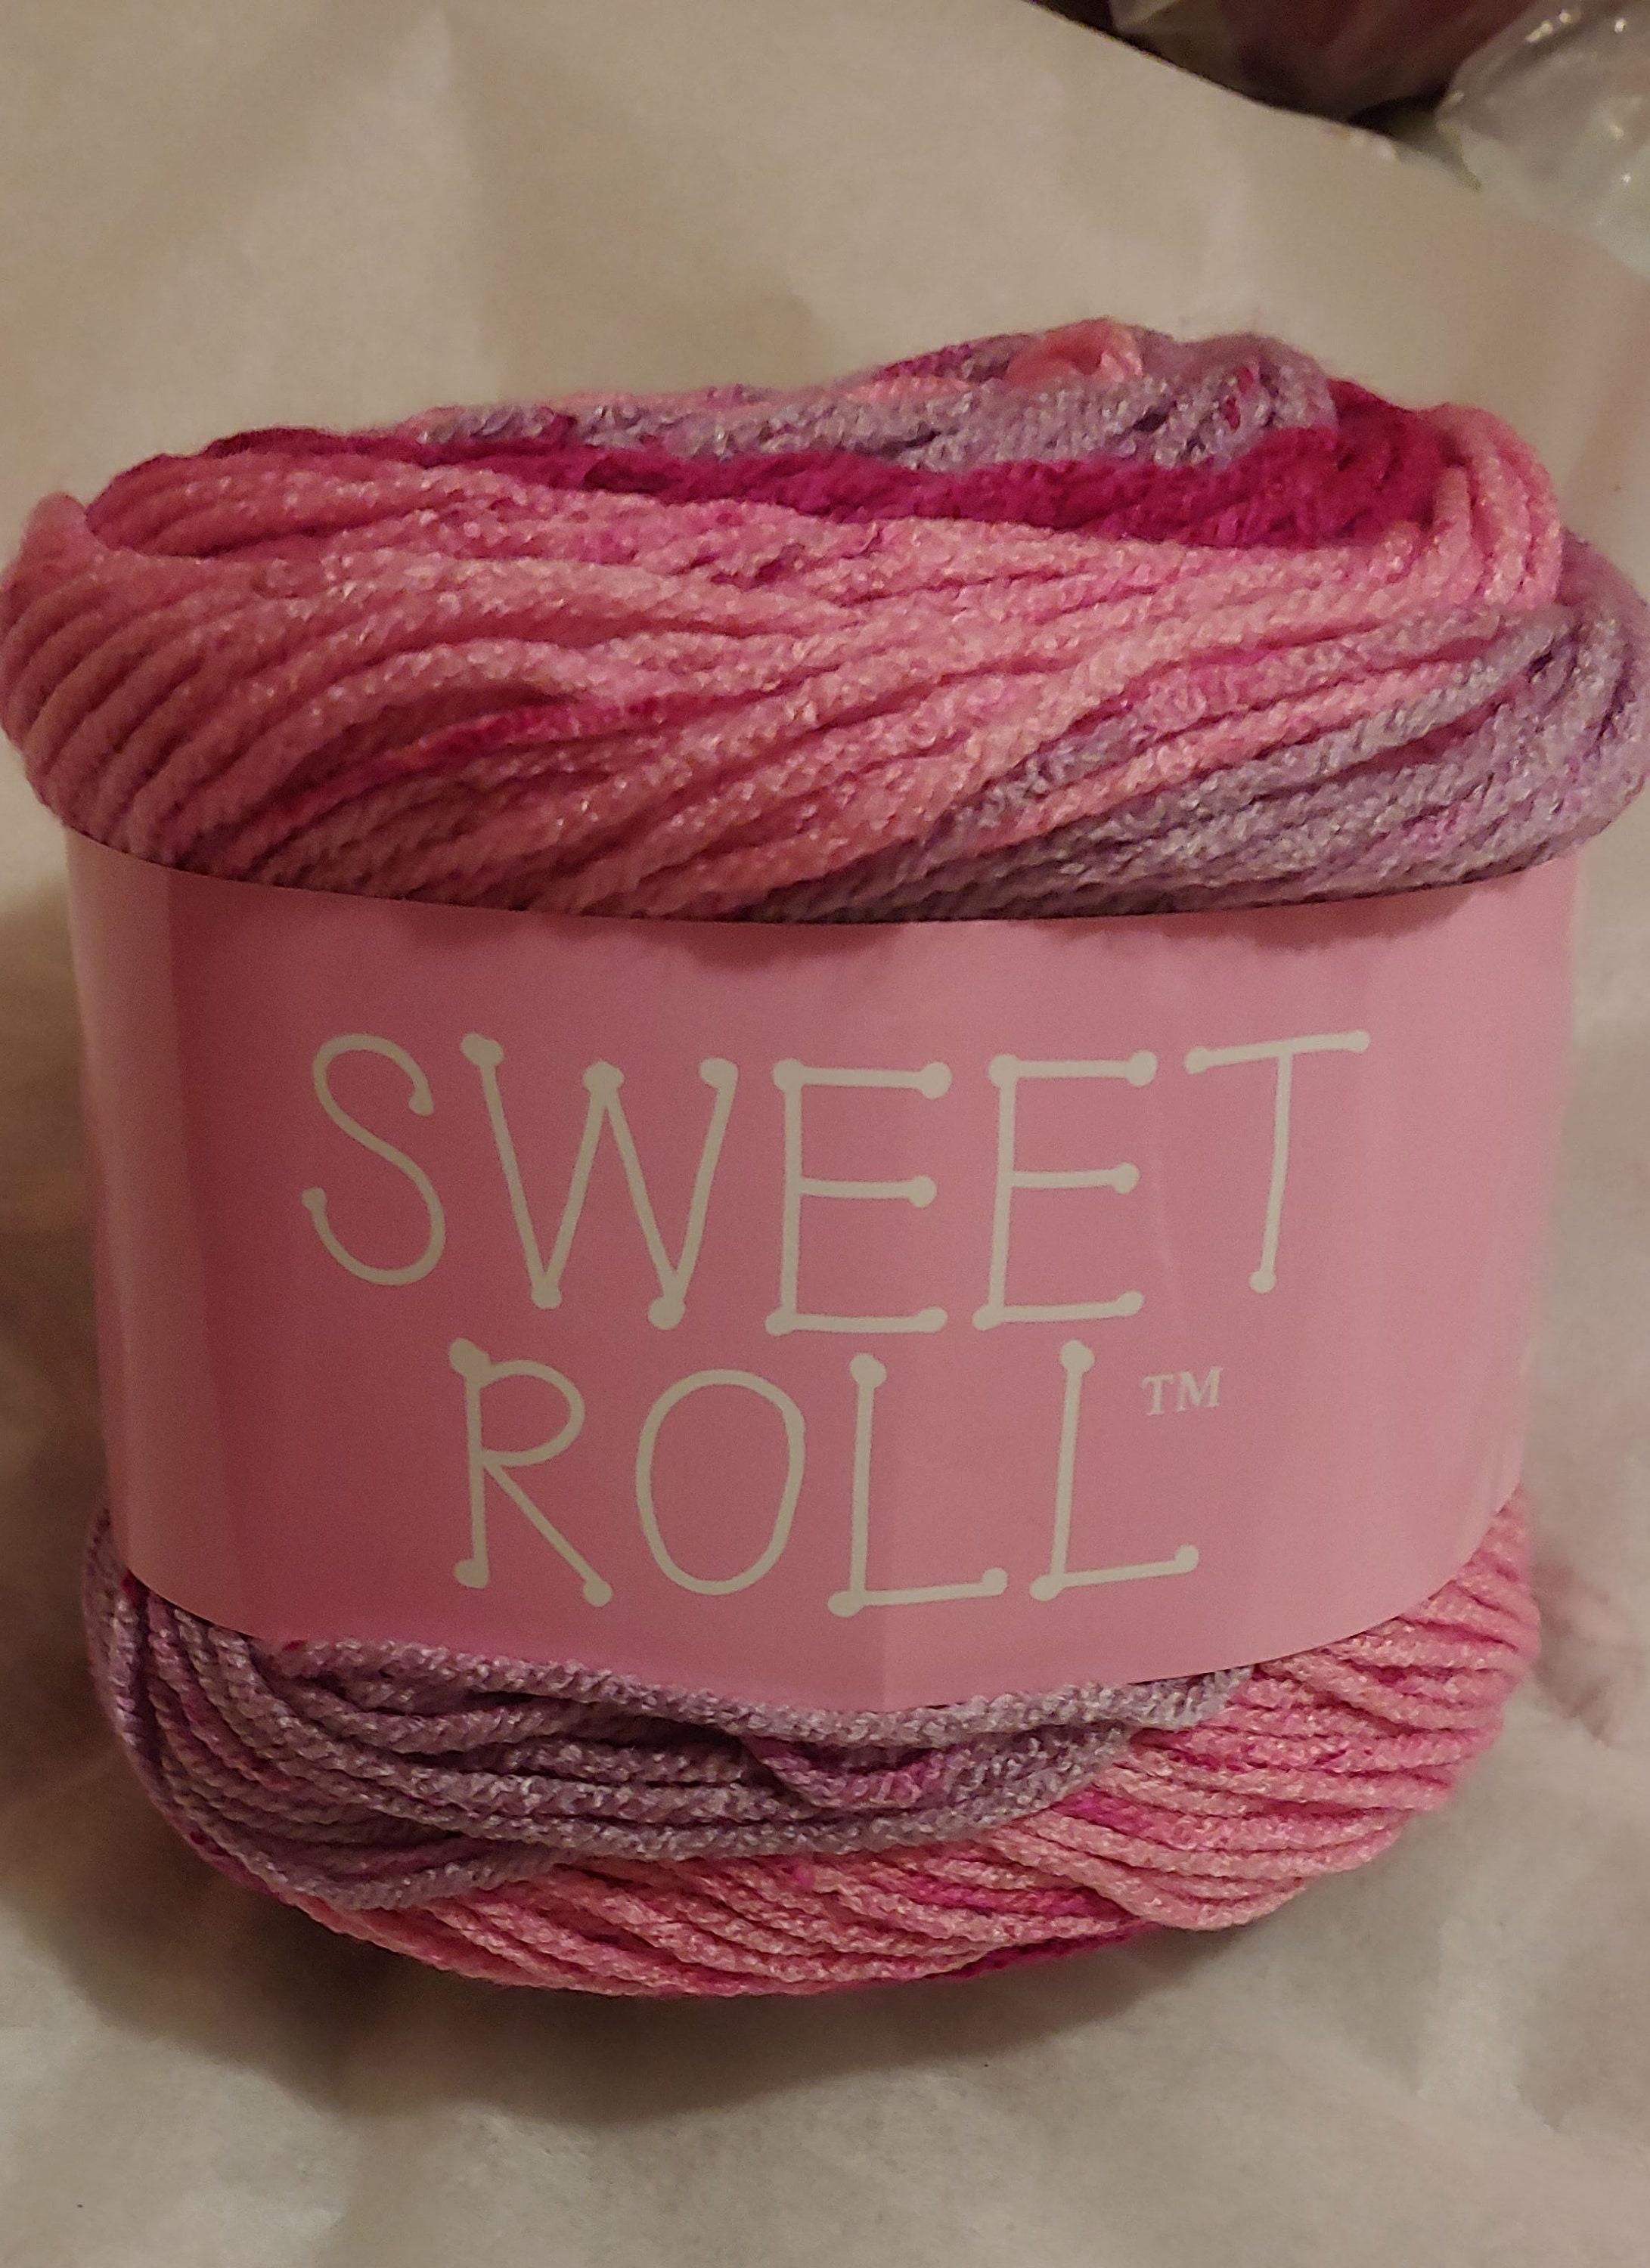 Papatya Cake Yarn, Sweet Roll Yarn 150 Gr, Rainbow Cake Yarn, Blanket Shawl  Crochet Knitting Yarn, Caron Cake Yarns 